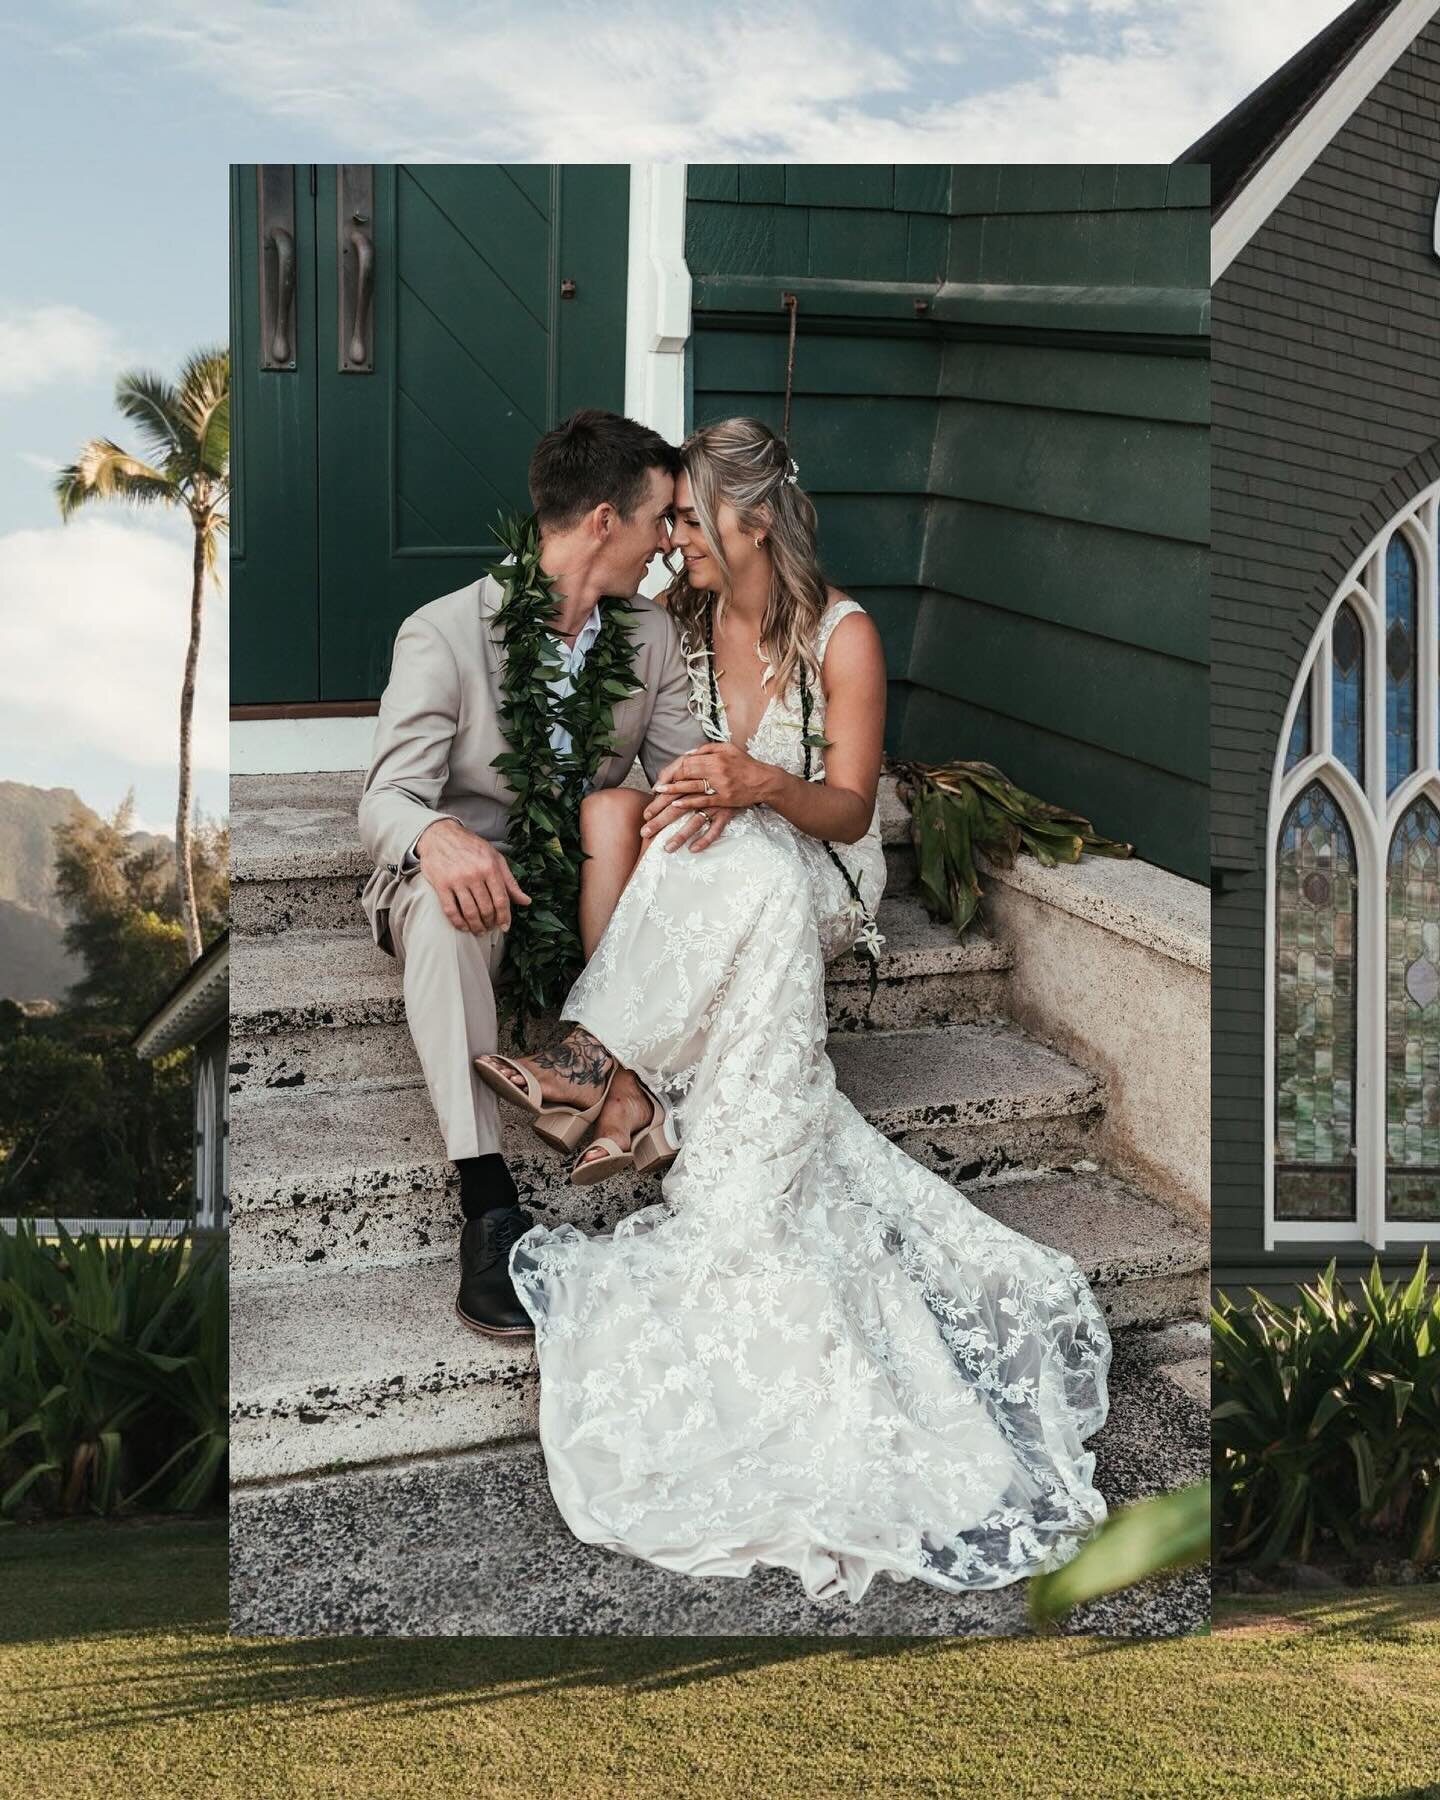 ⛪️👰🏻&zwj;♀️🤵🏻
.
Bookings and inquiries at www.ikaika.photo 🤙🏾
.
.
.
.
.
#weddingphotography #weddingphotographer #kauaiphotograher #kauaiphotography #hawaiiphotographer #hawaiiphotography #kauaiweddingphotographer #kauaiweddingphotography #kaua